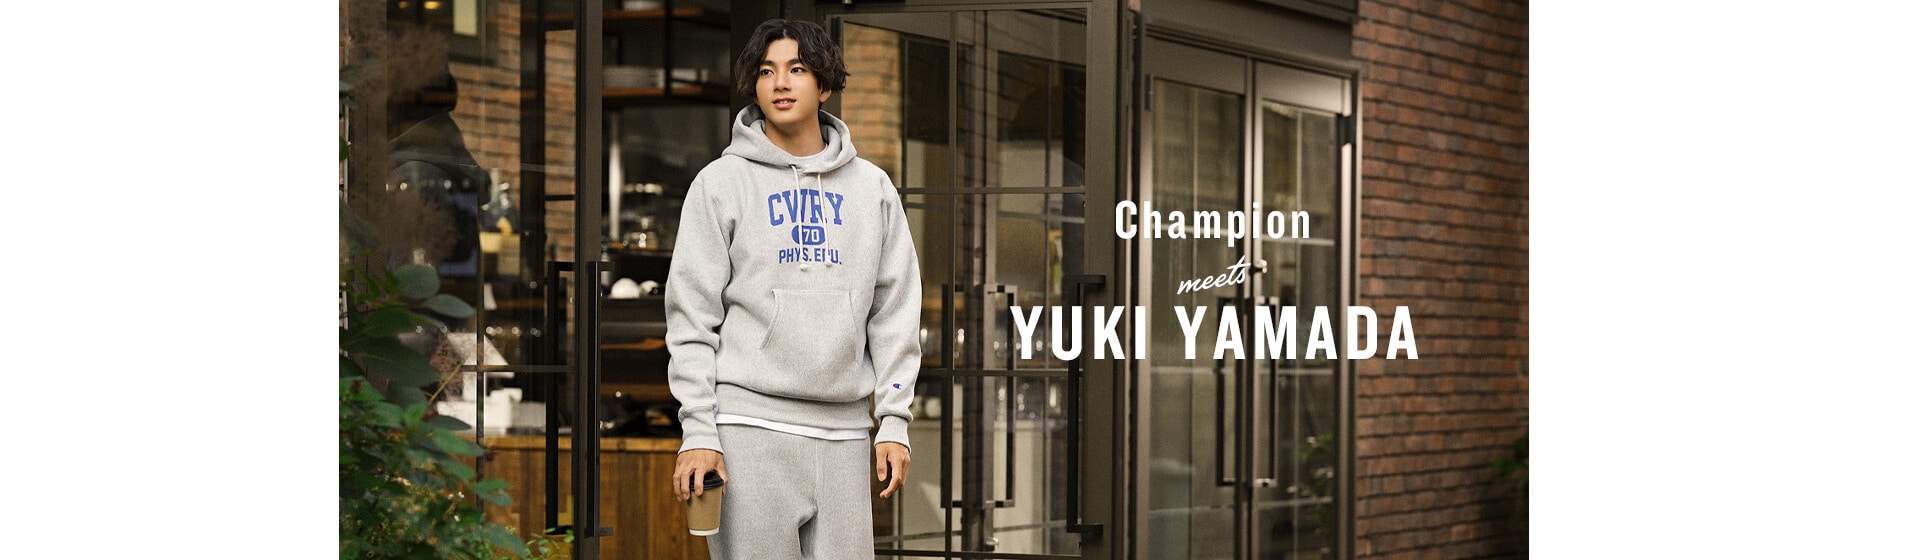 Champion meets YUKI YAMADA